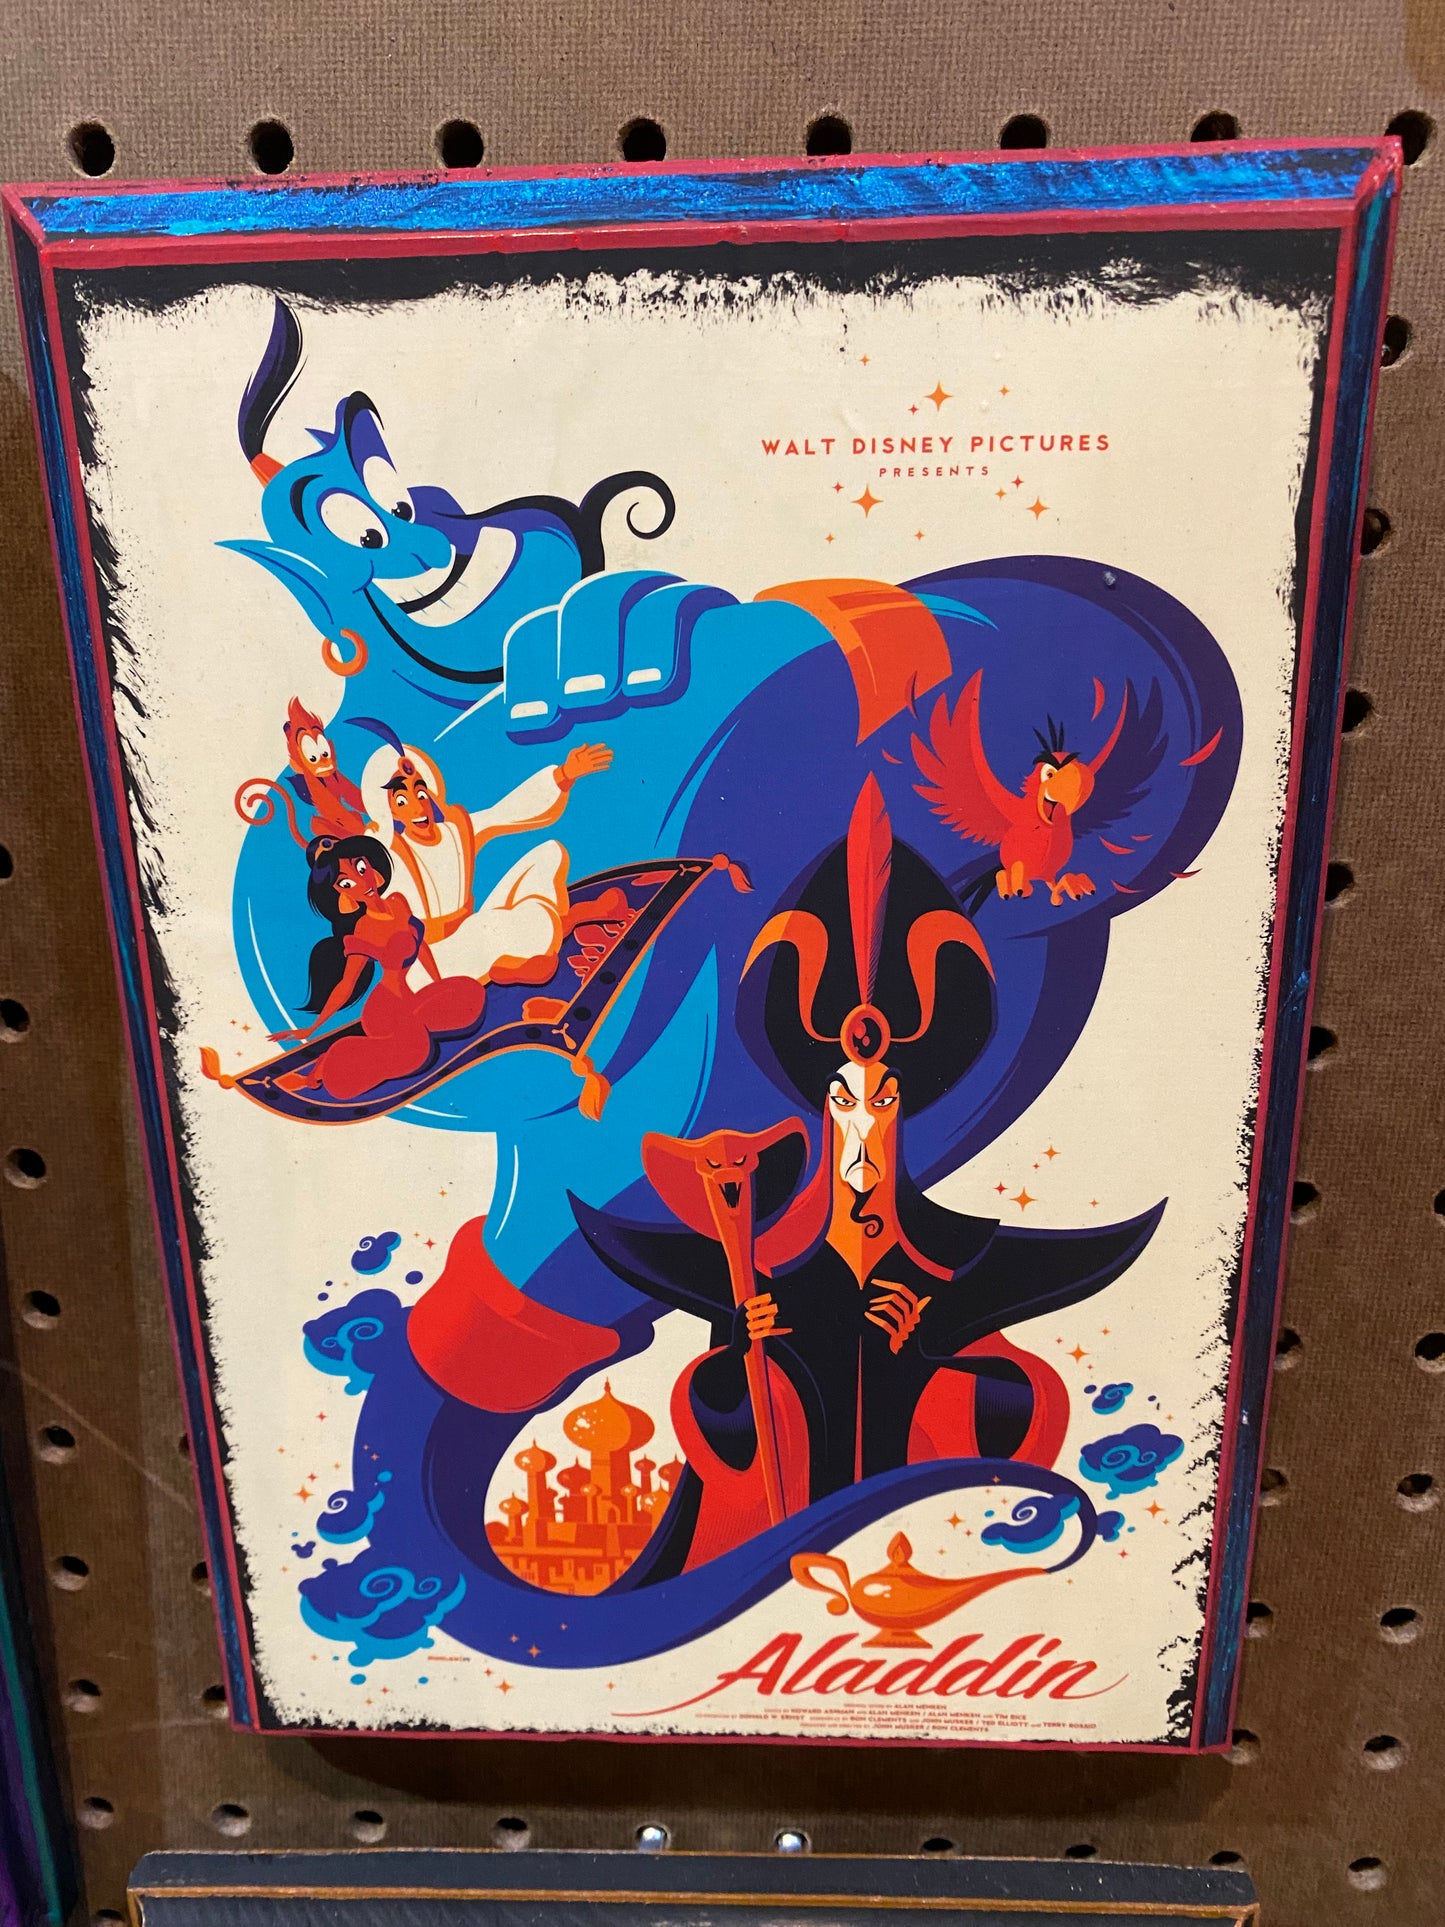 Sale: Half off Aladdin wood art plaque 9x7